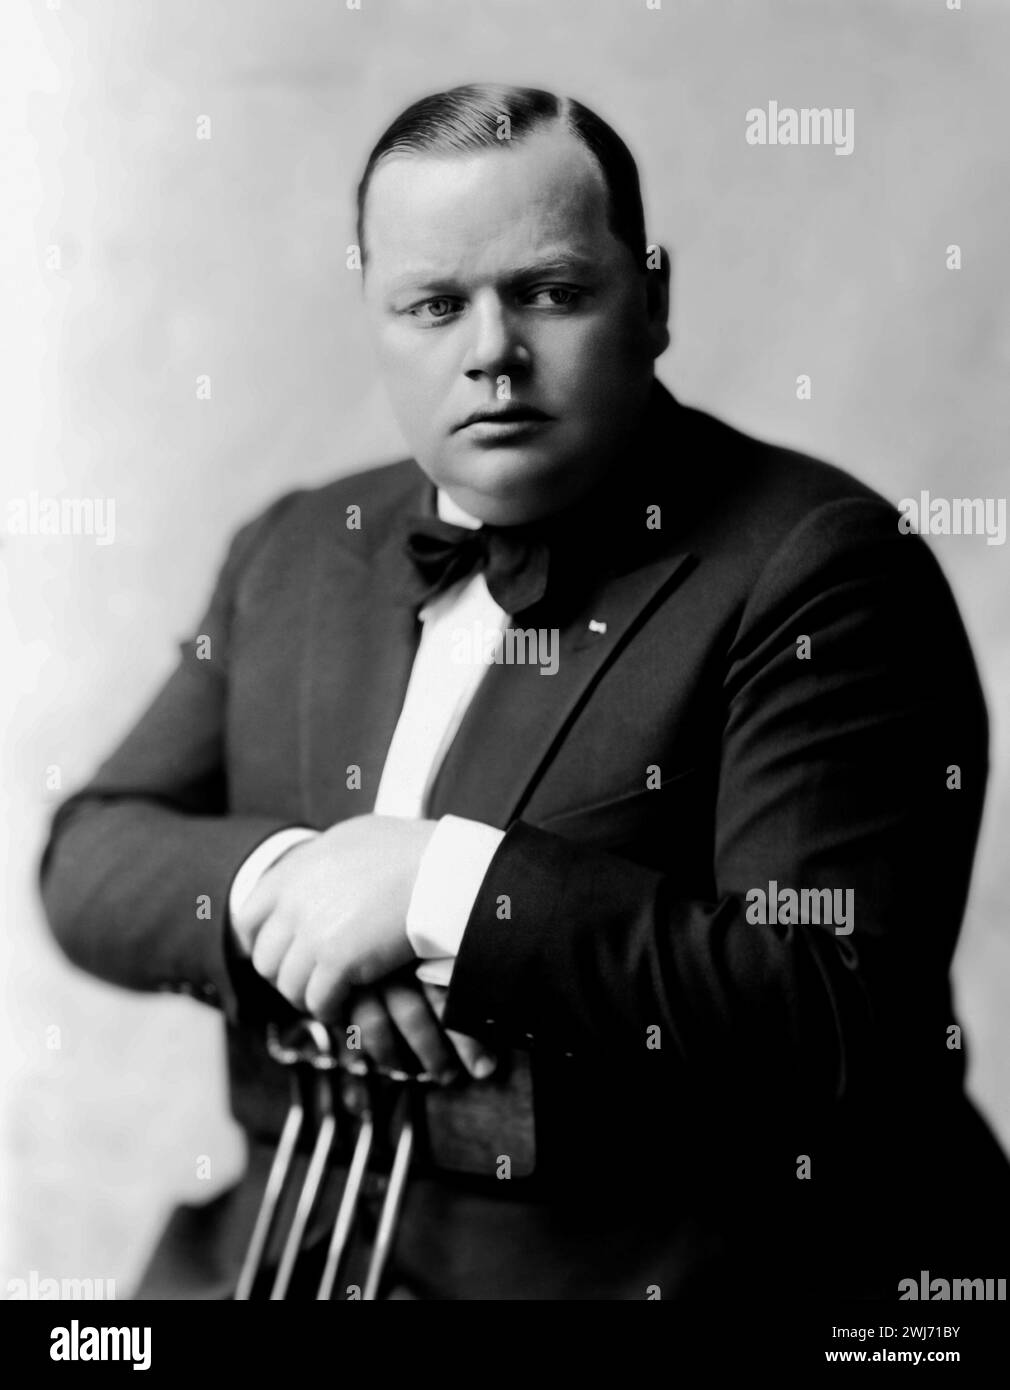 Roscoe 'Fatty' Arbuckle portrait, silent film era, c 1920s Stock Photo